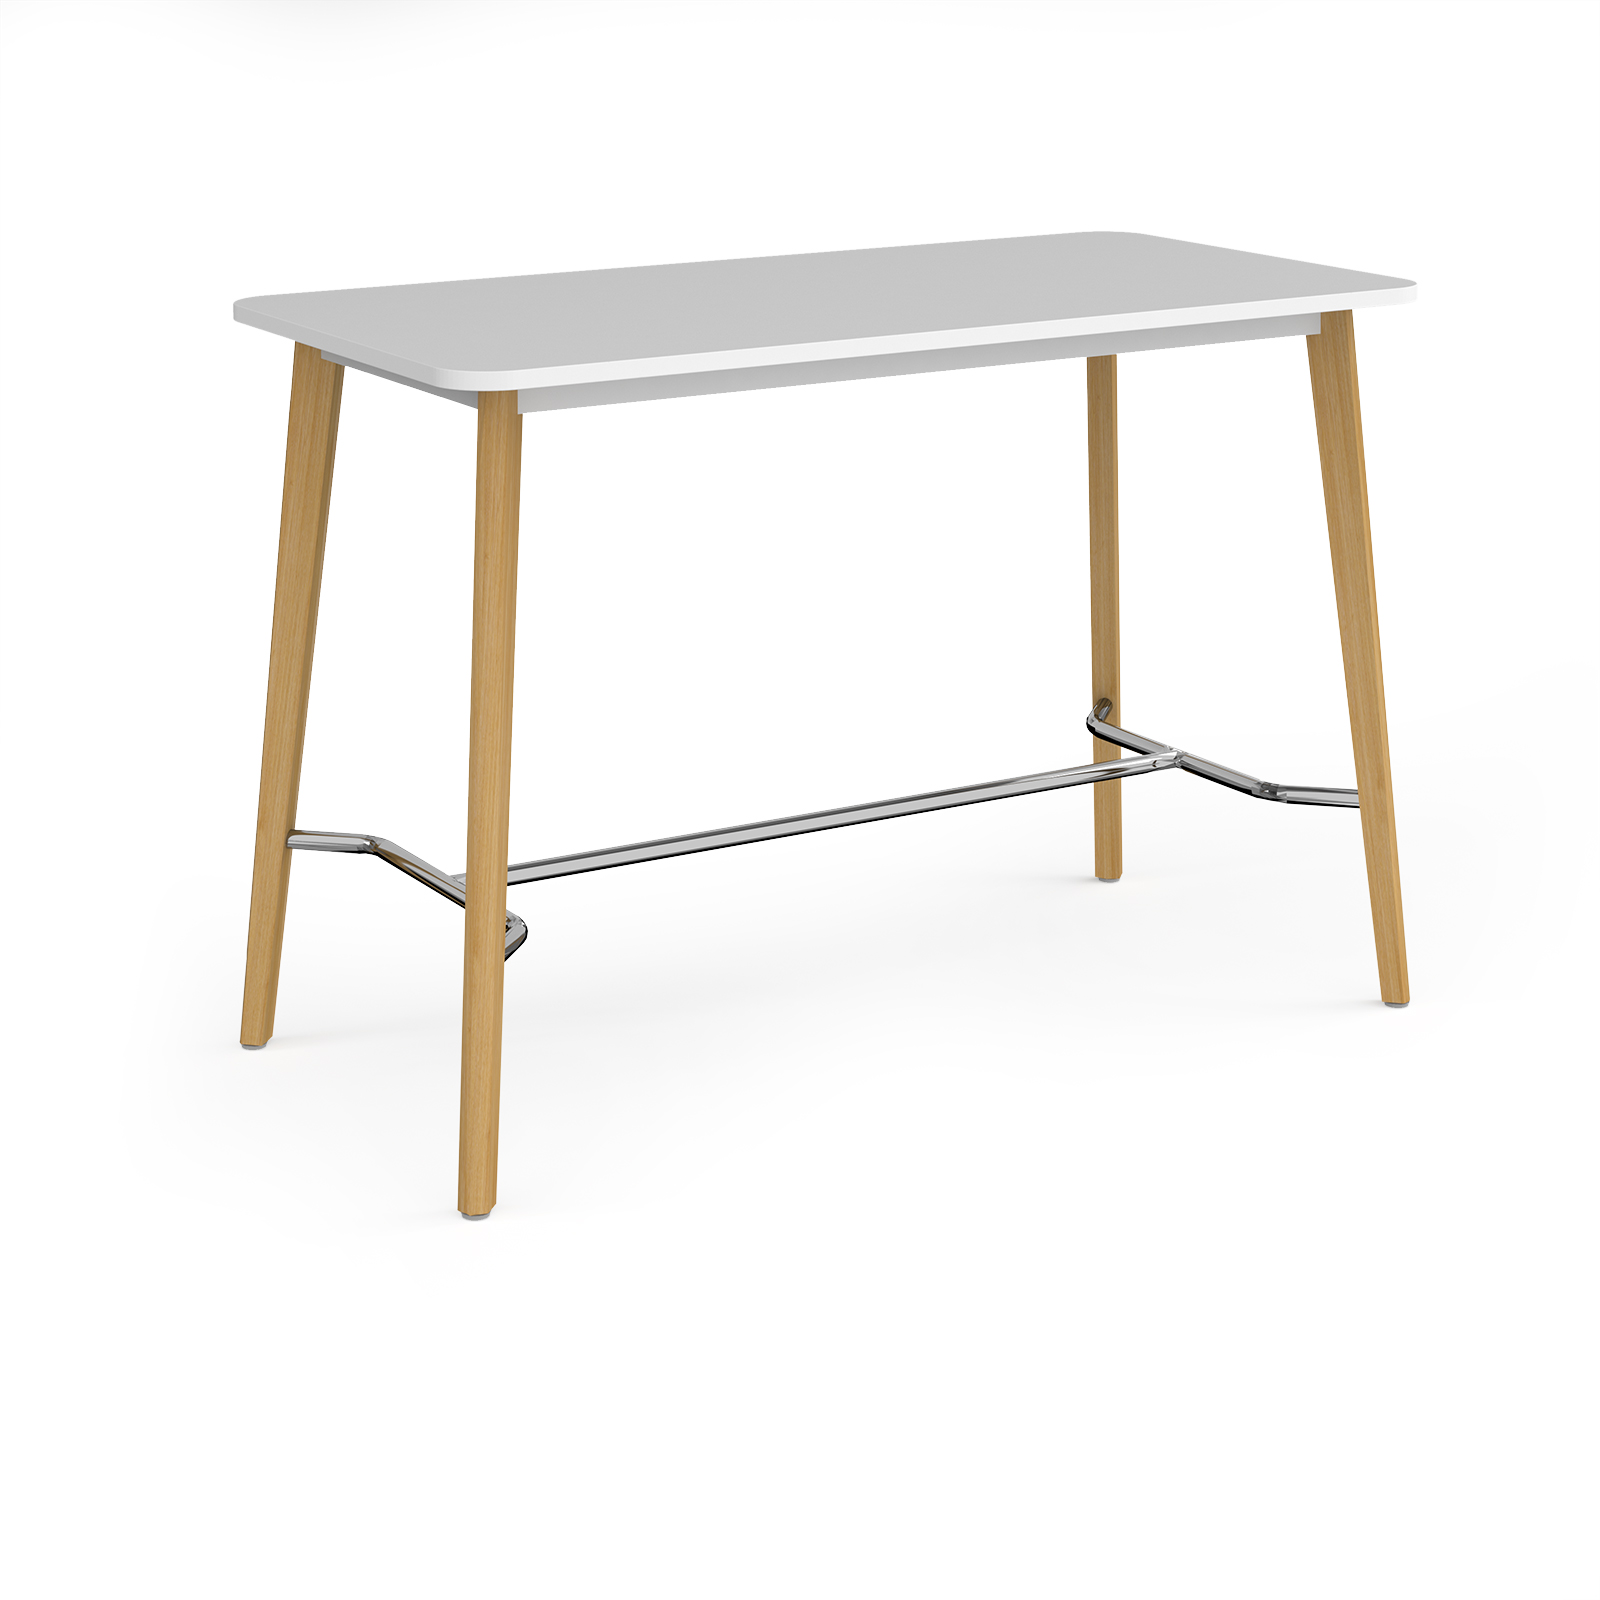 Como rectangular poseur table with 4 oak legs 1800mm x 800mm - white